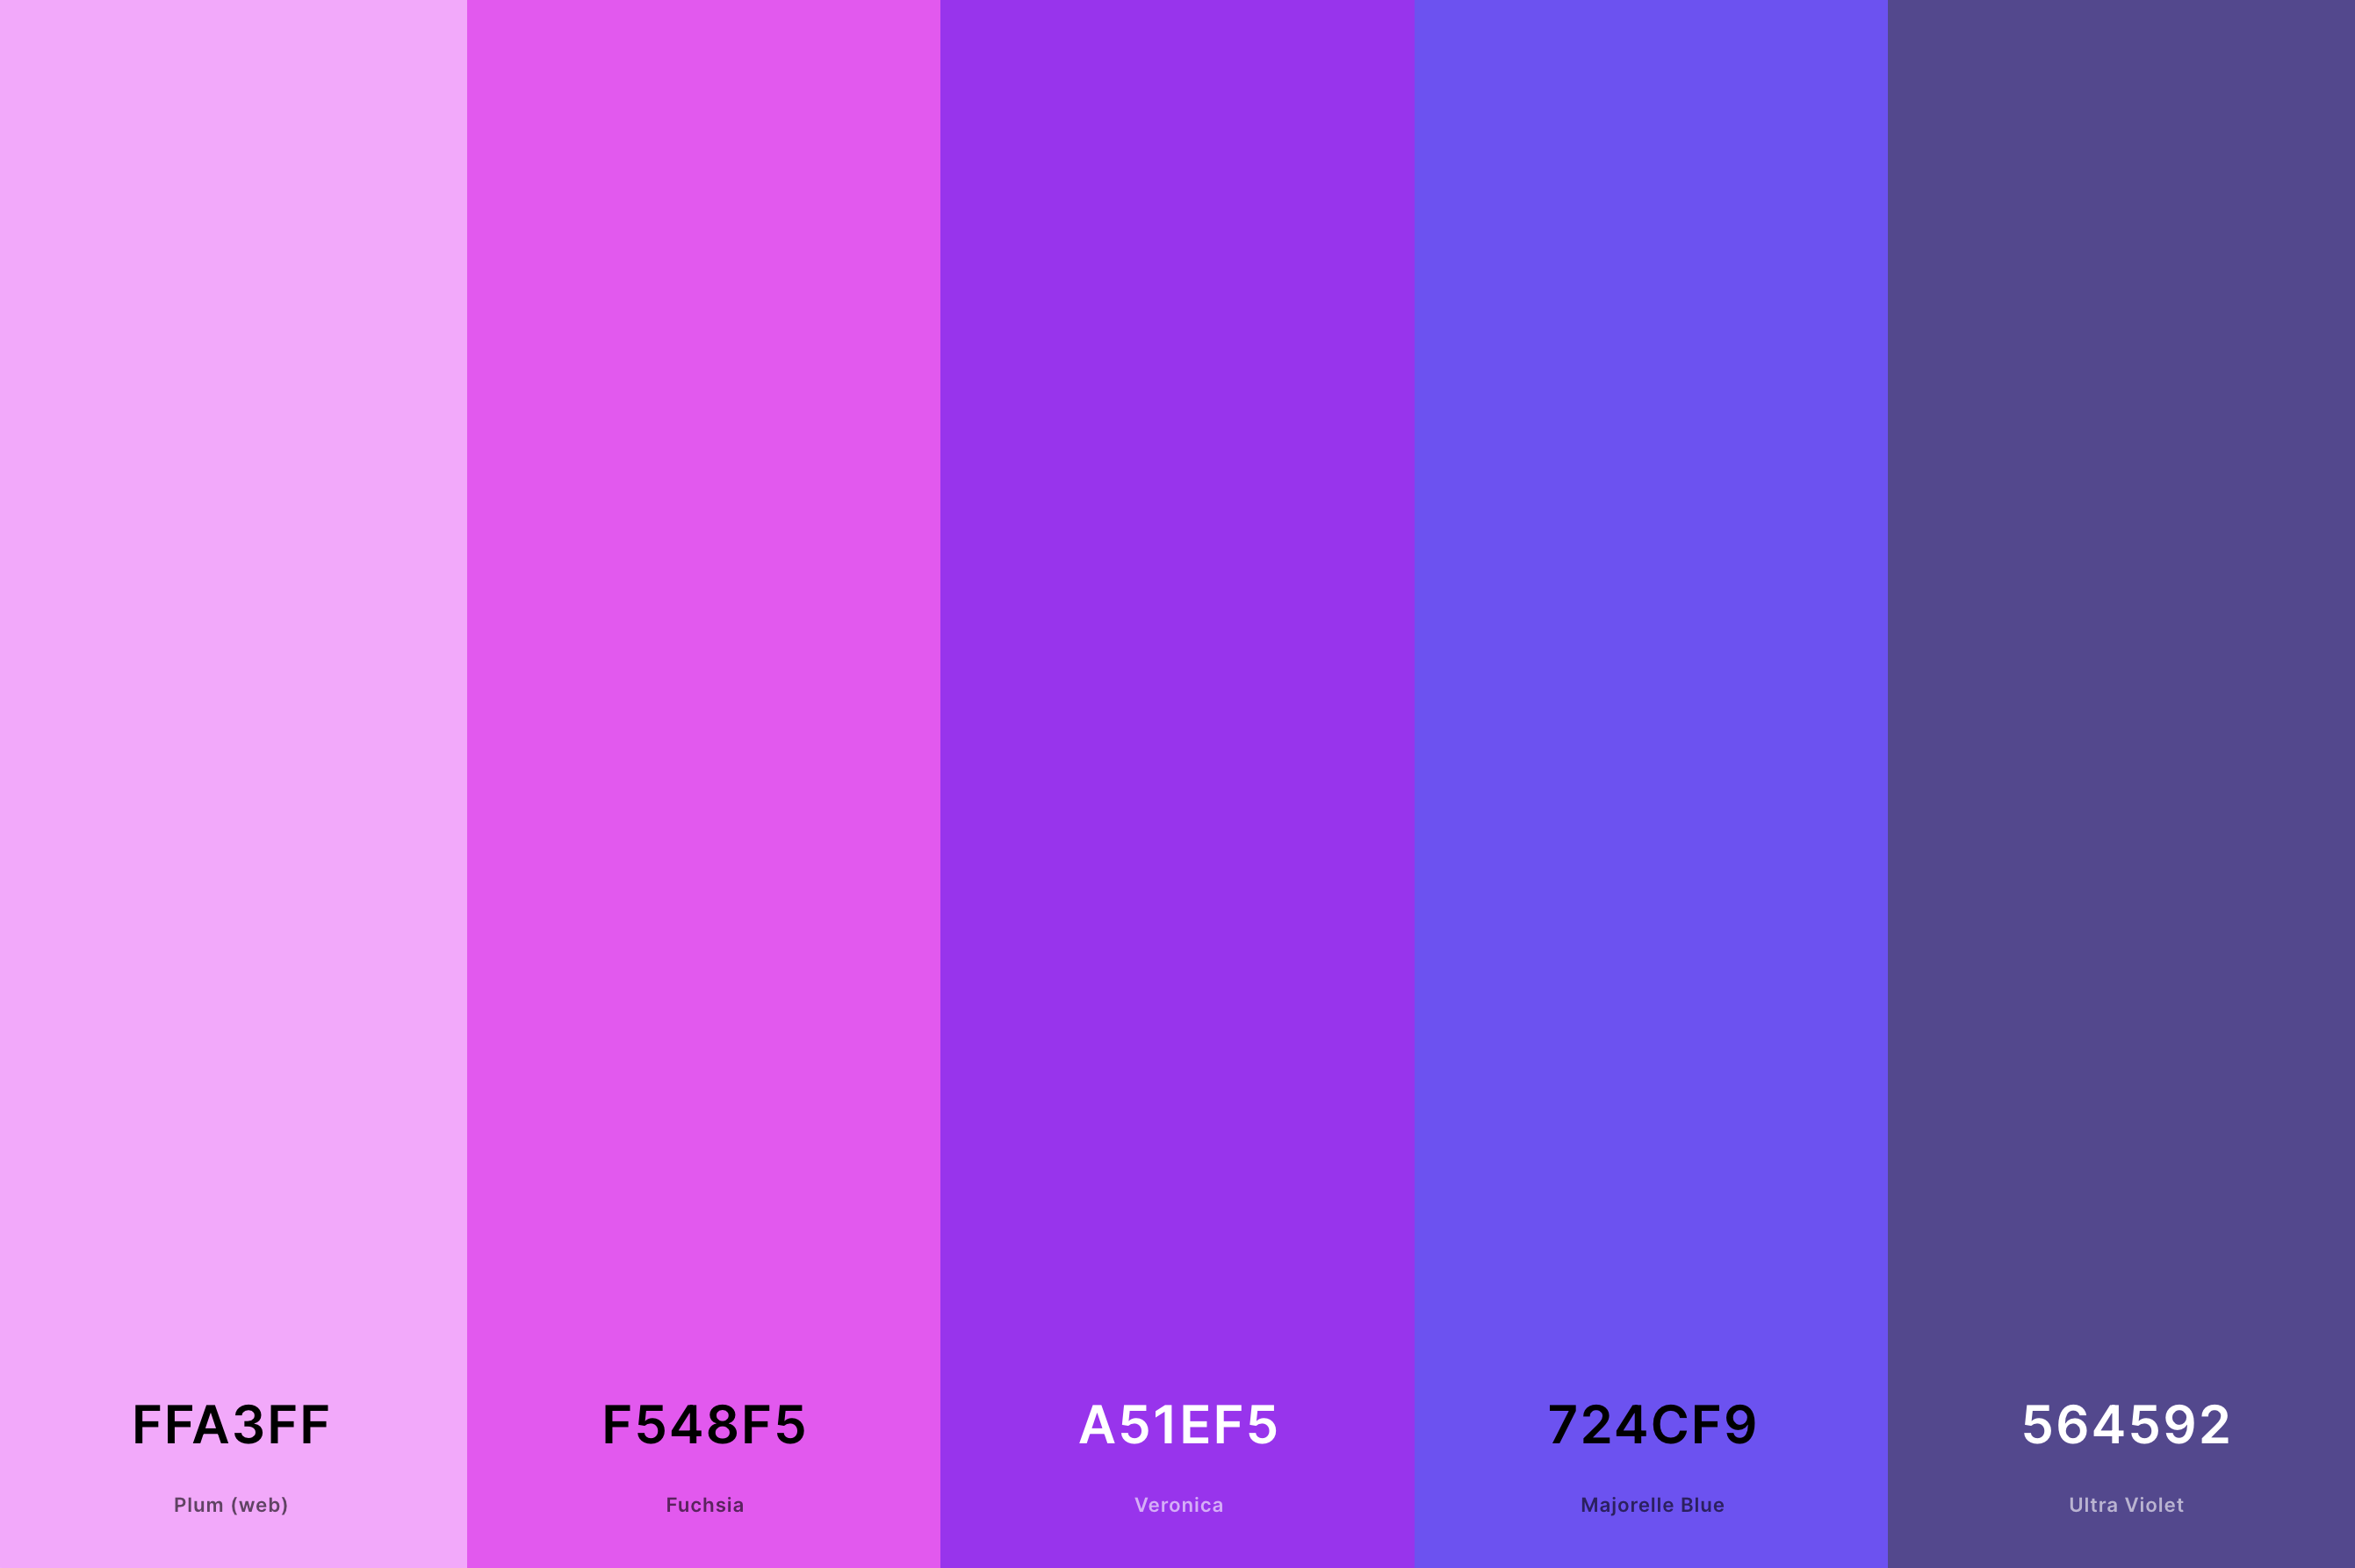 26. Neon Lilac Color Palette Color Palette with Plum (Web) (Hex #FFA3FF) + Fuchsia (Hex #F548F5) + Veronica (Hex #A51EF5) + Majorelle Blue (Hex #724CF9) + Ultra Violet (Hex #564592) Color Palette with Hex Codes